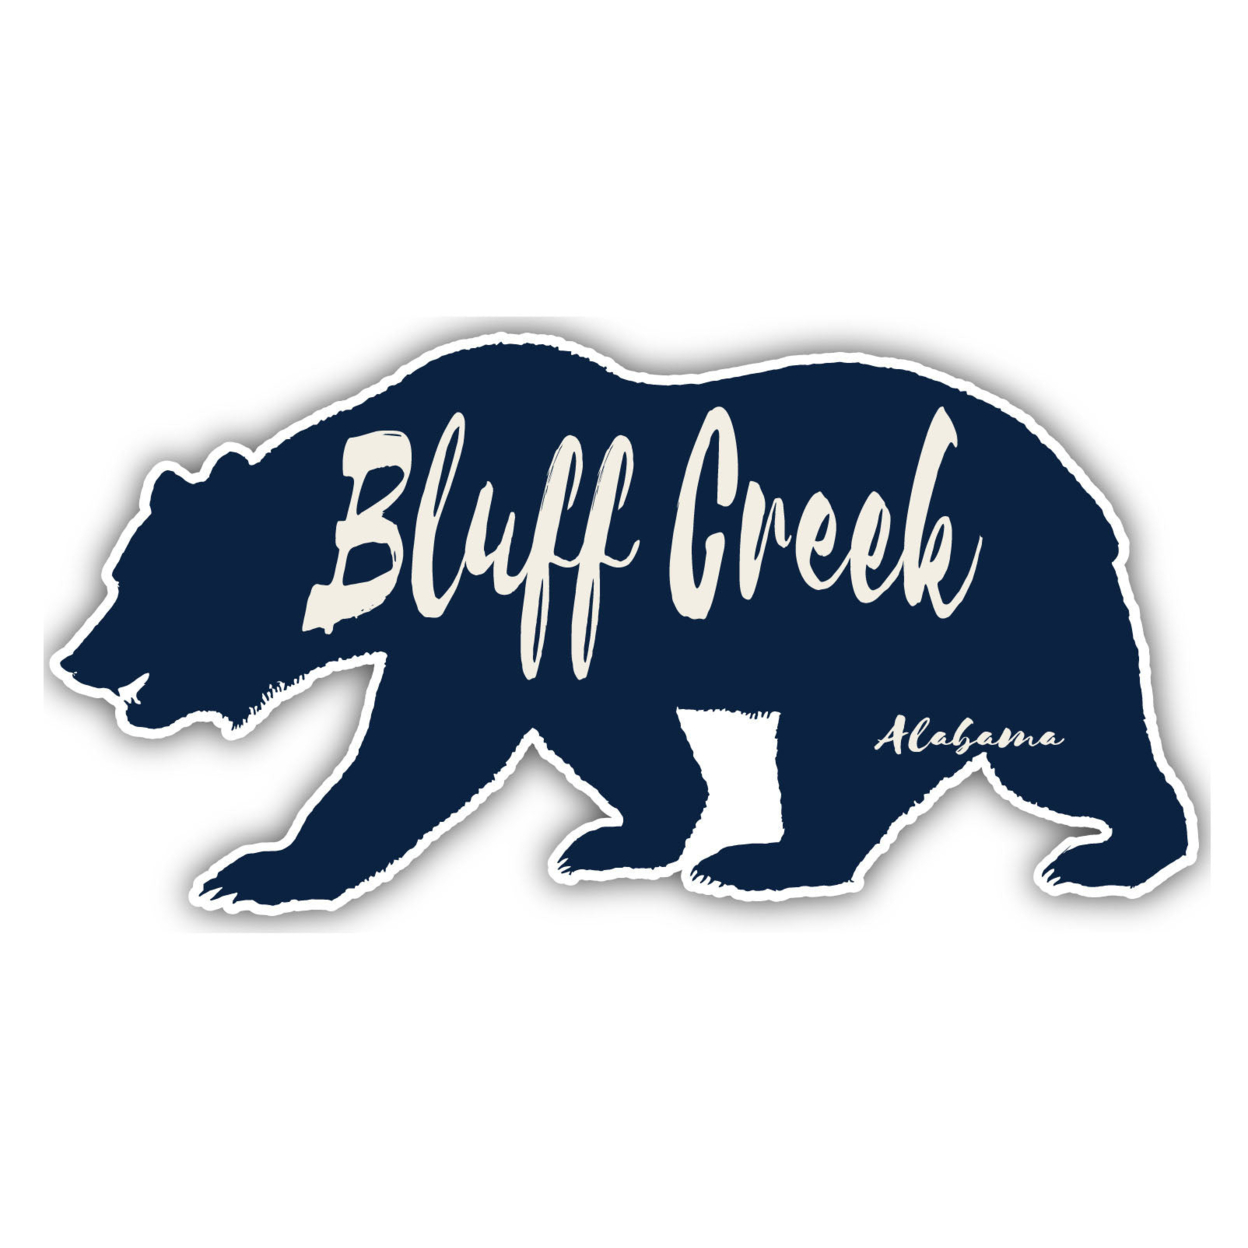 Bluff Creek Alabama Souvenir Decorative Stickers (Choose Theme And Size) - Single Unit, 8-Inch, Bear